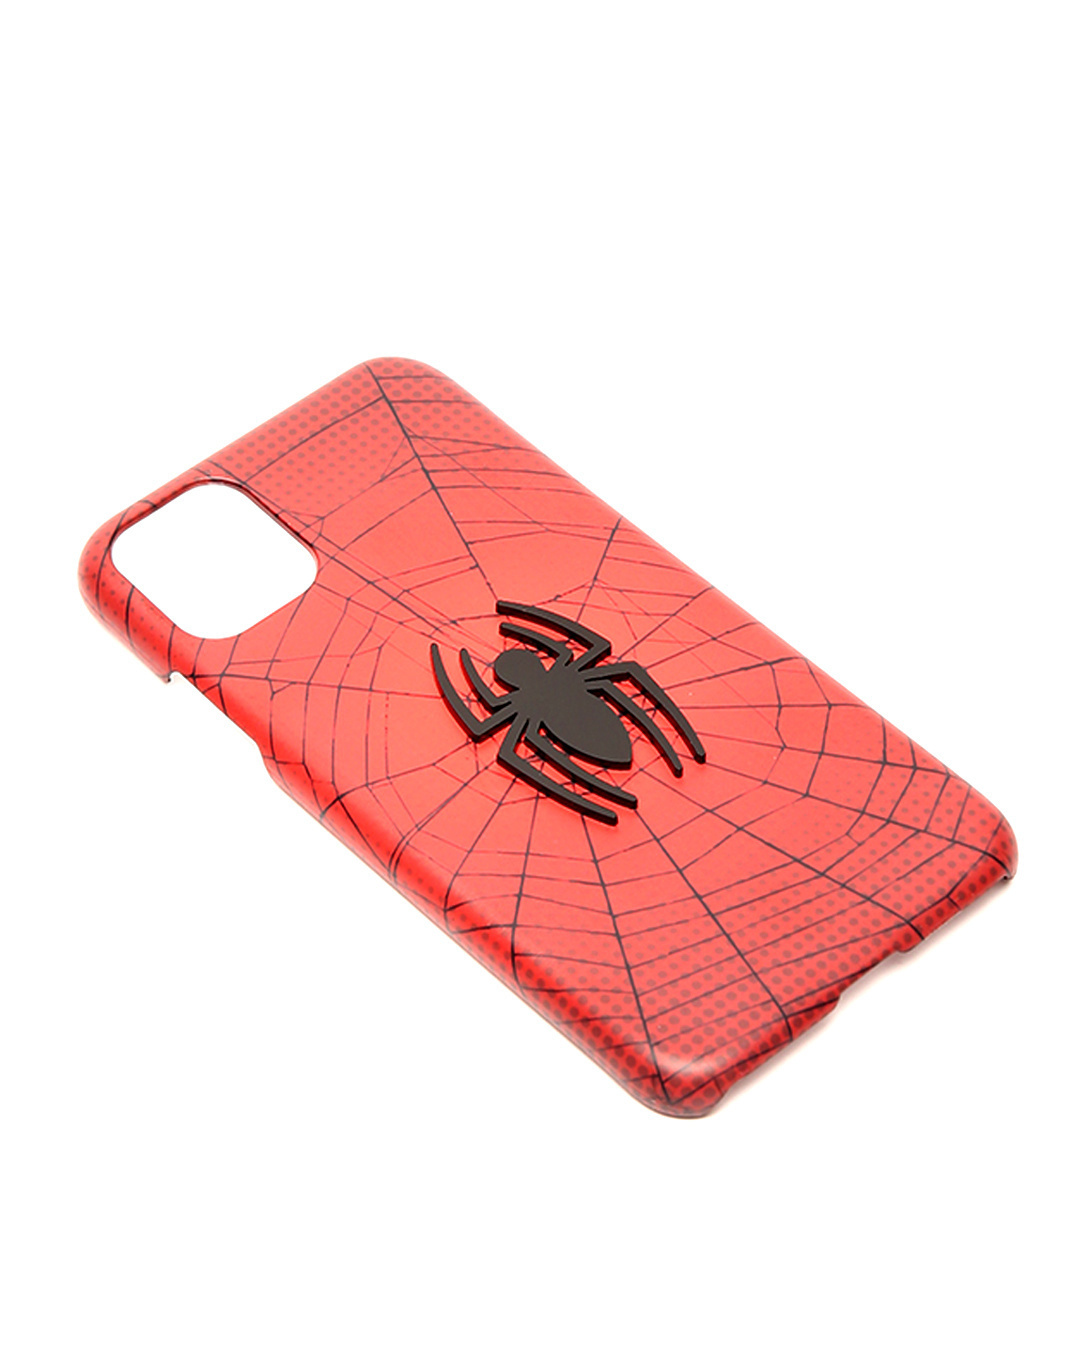 Shop Spider Doodle Xiaomi Redmi Note 7 Pro 3D Mobile Cover-Back